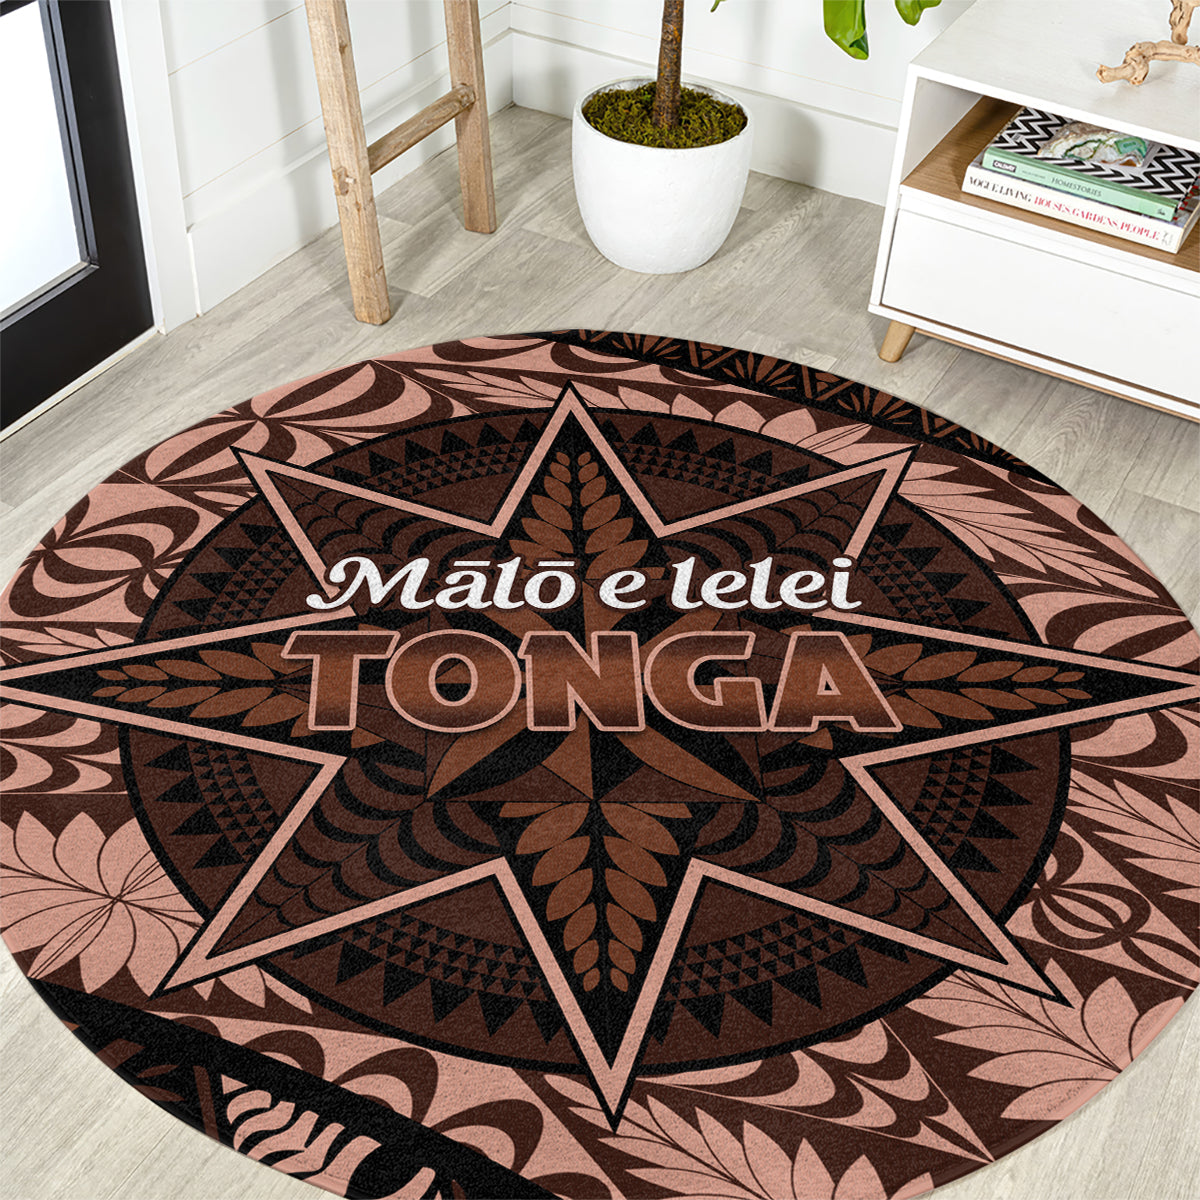 Malo e lelei Tonga Round Carpet Tongan Ngatu Pattern Vintage Vibes LT14 Brown - Polynesian Pride